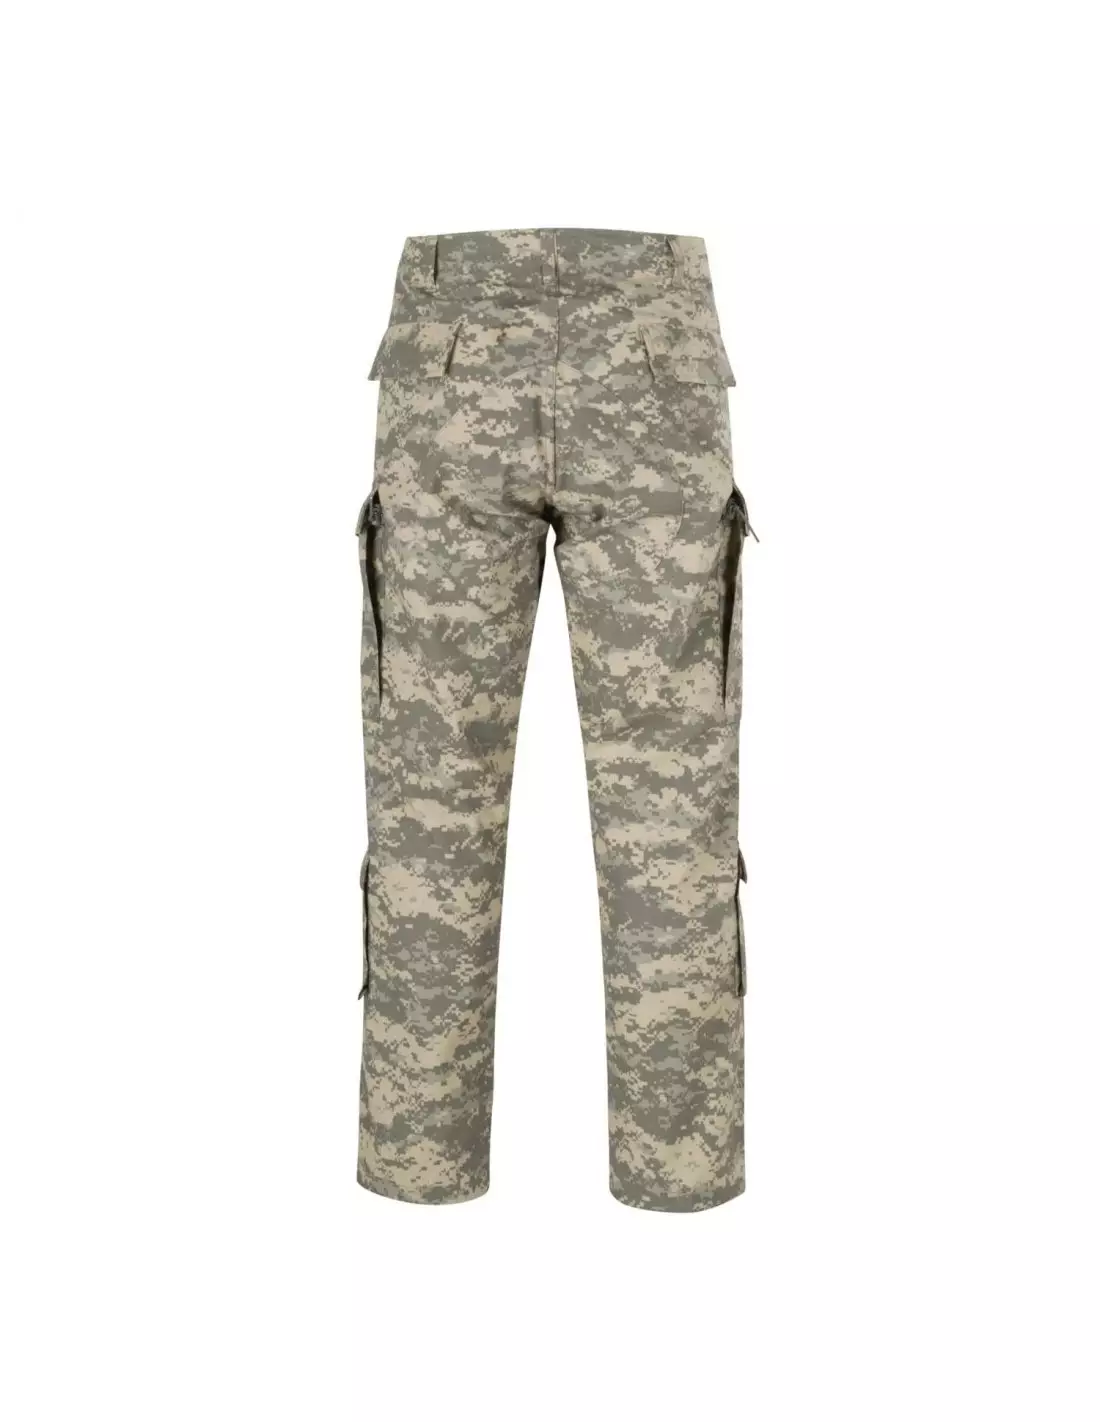 Helikon-Tex® ACU (Army Combat Uniform) Trousers / Pants - Ripstop - UCP